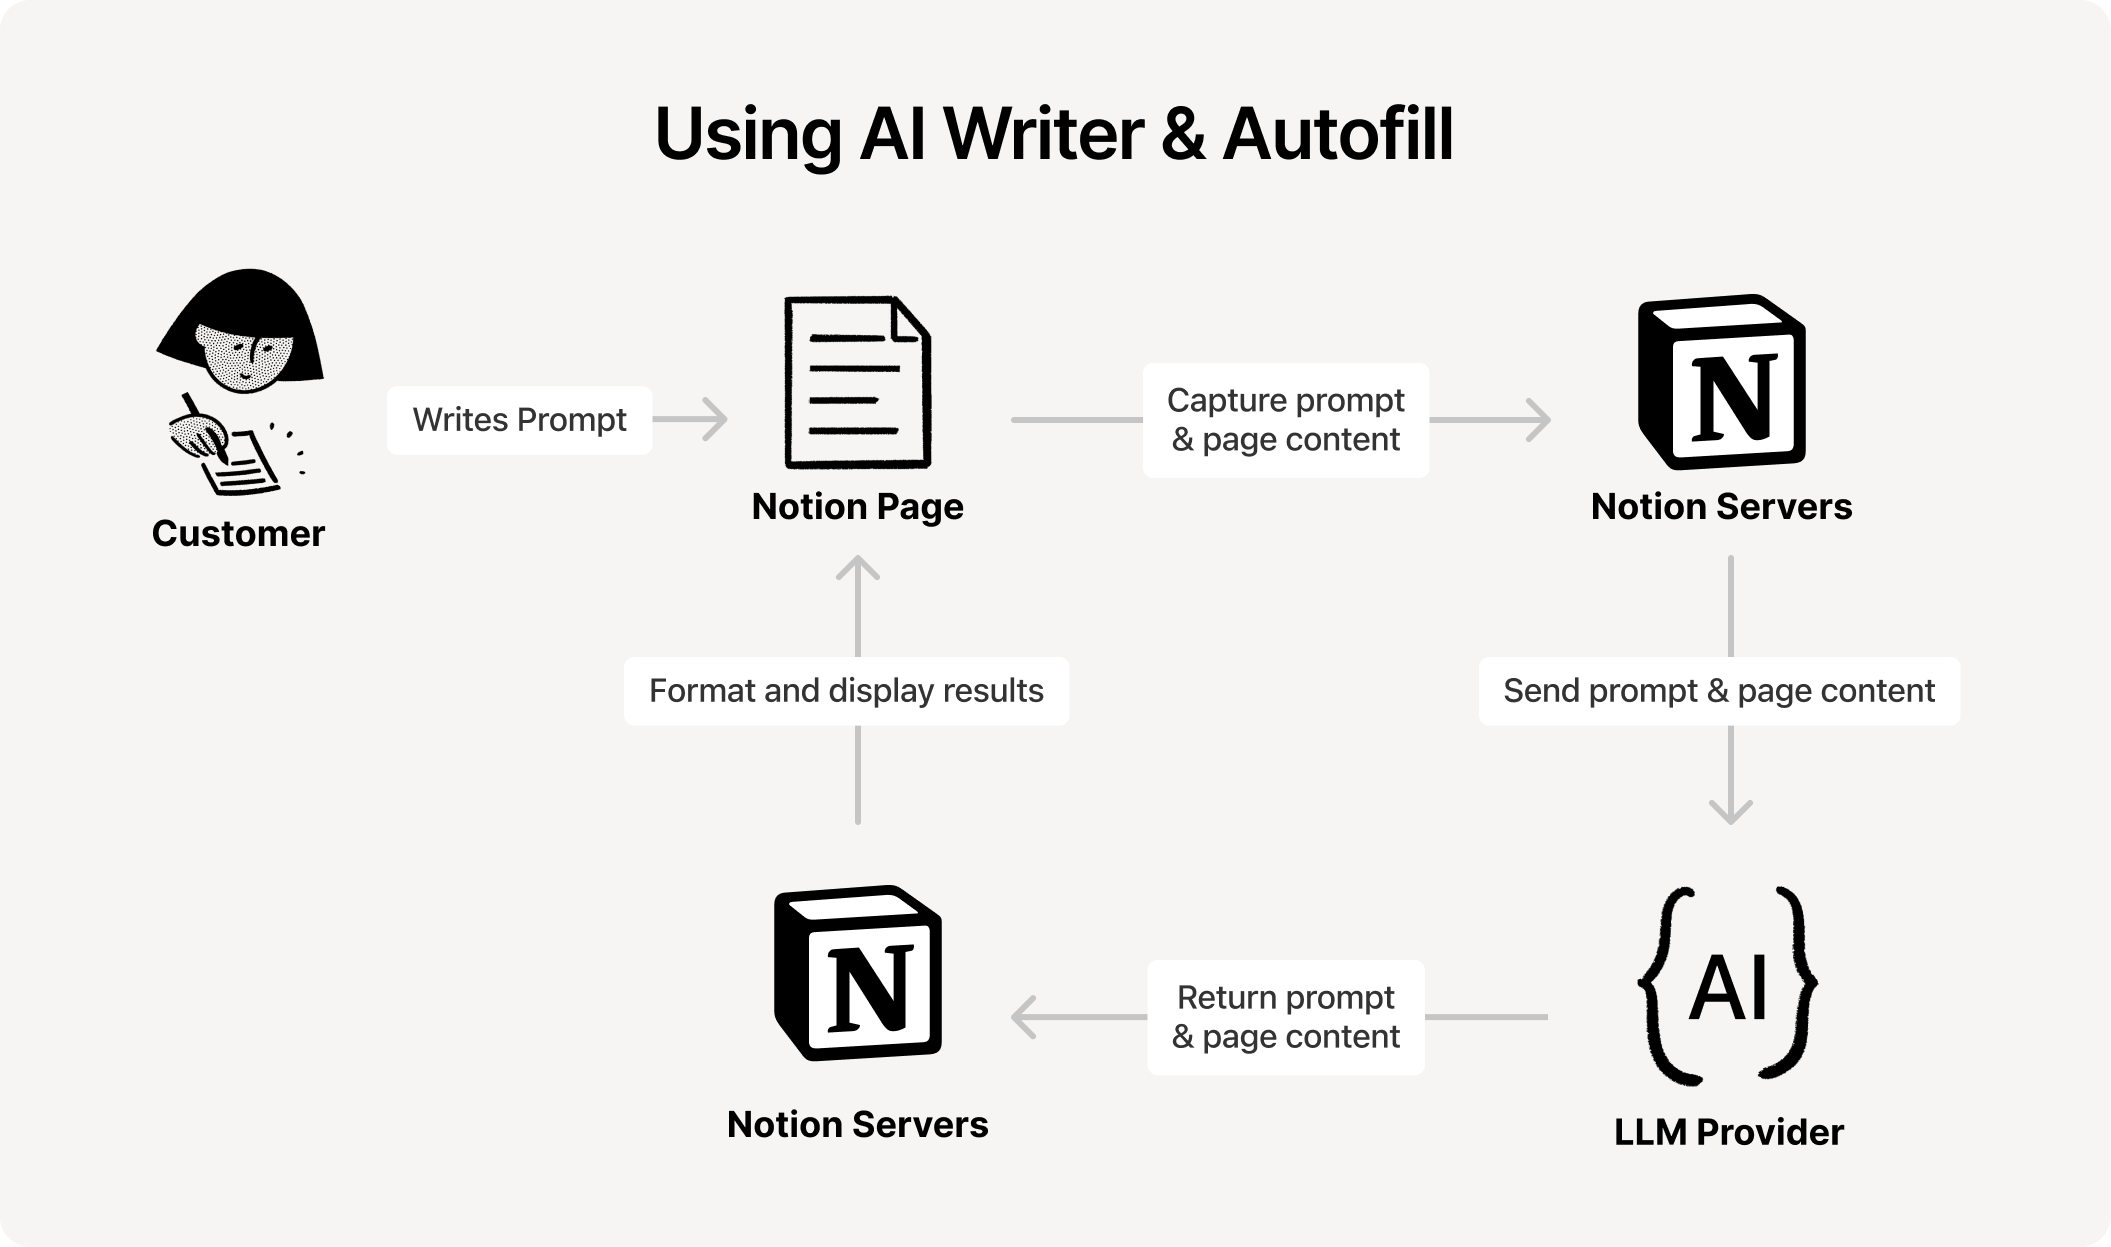 How do Writer & Autofill work?